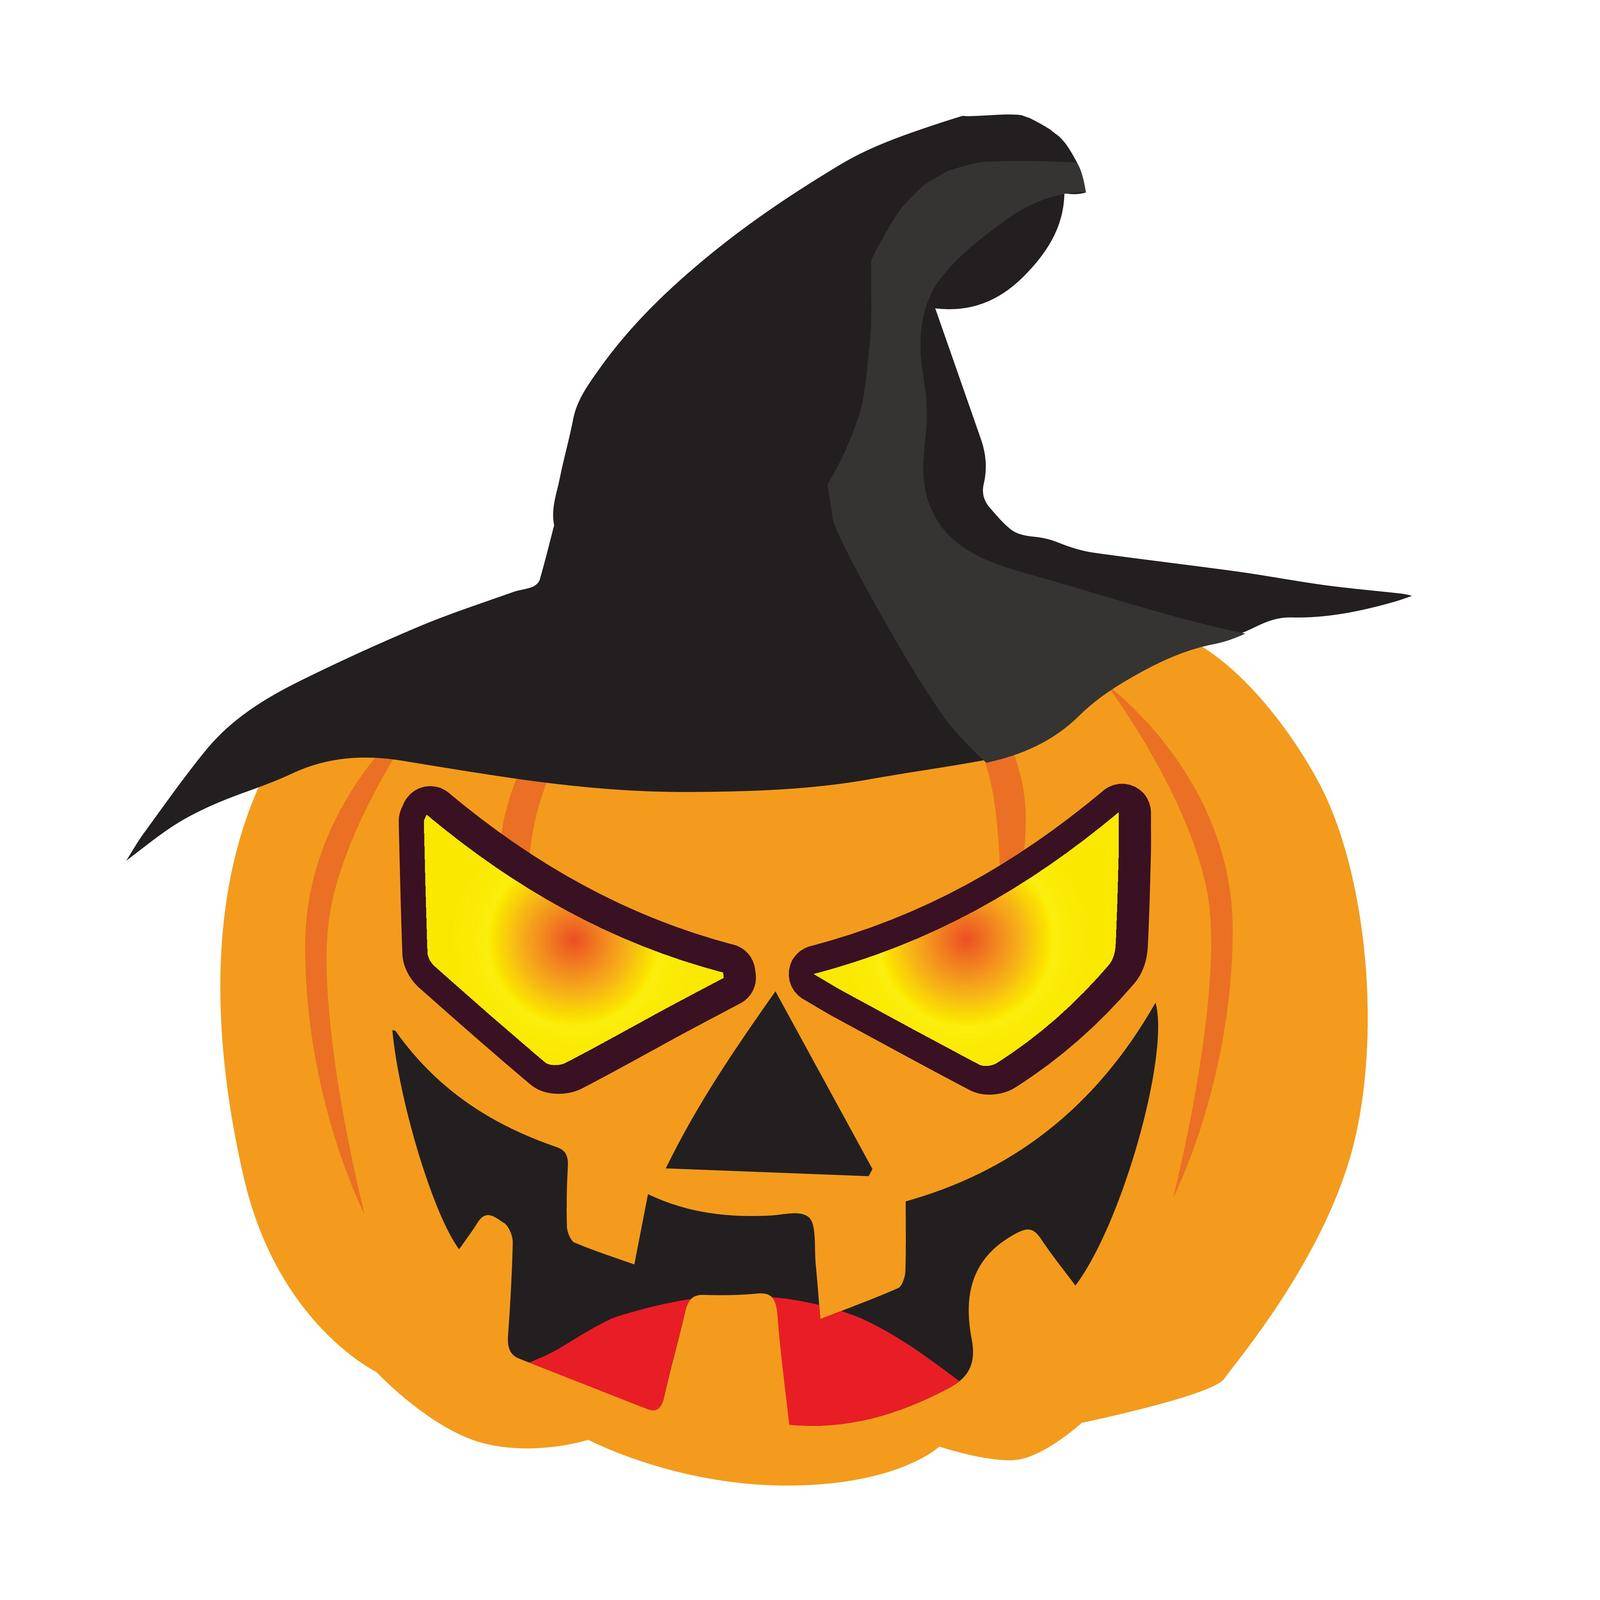 Halloween spooky elements. Cartoon halloween spooky evil silhouettes